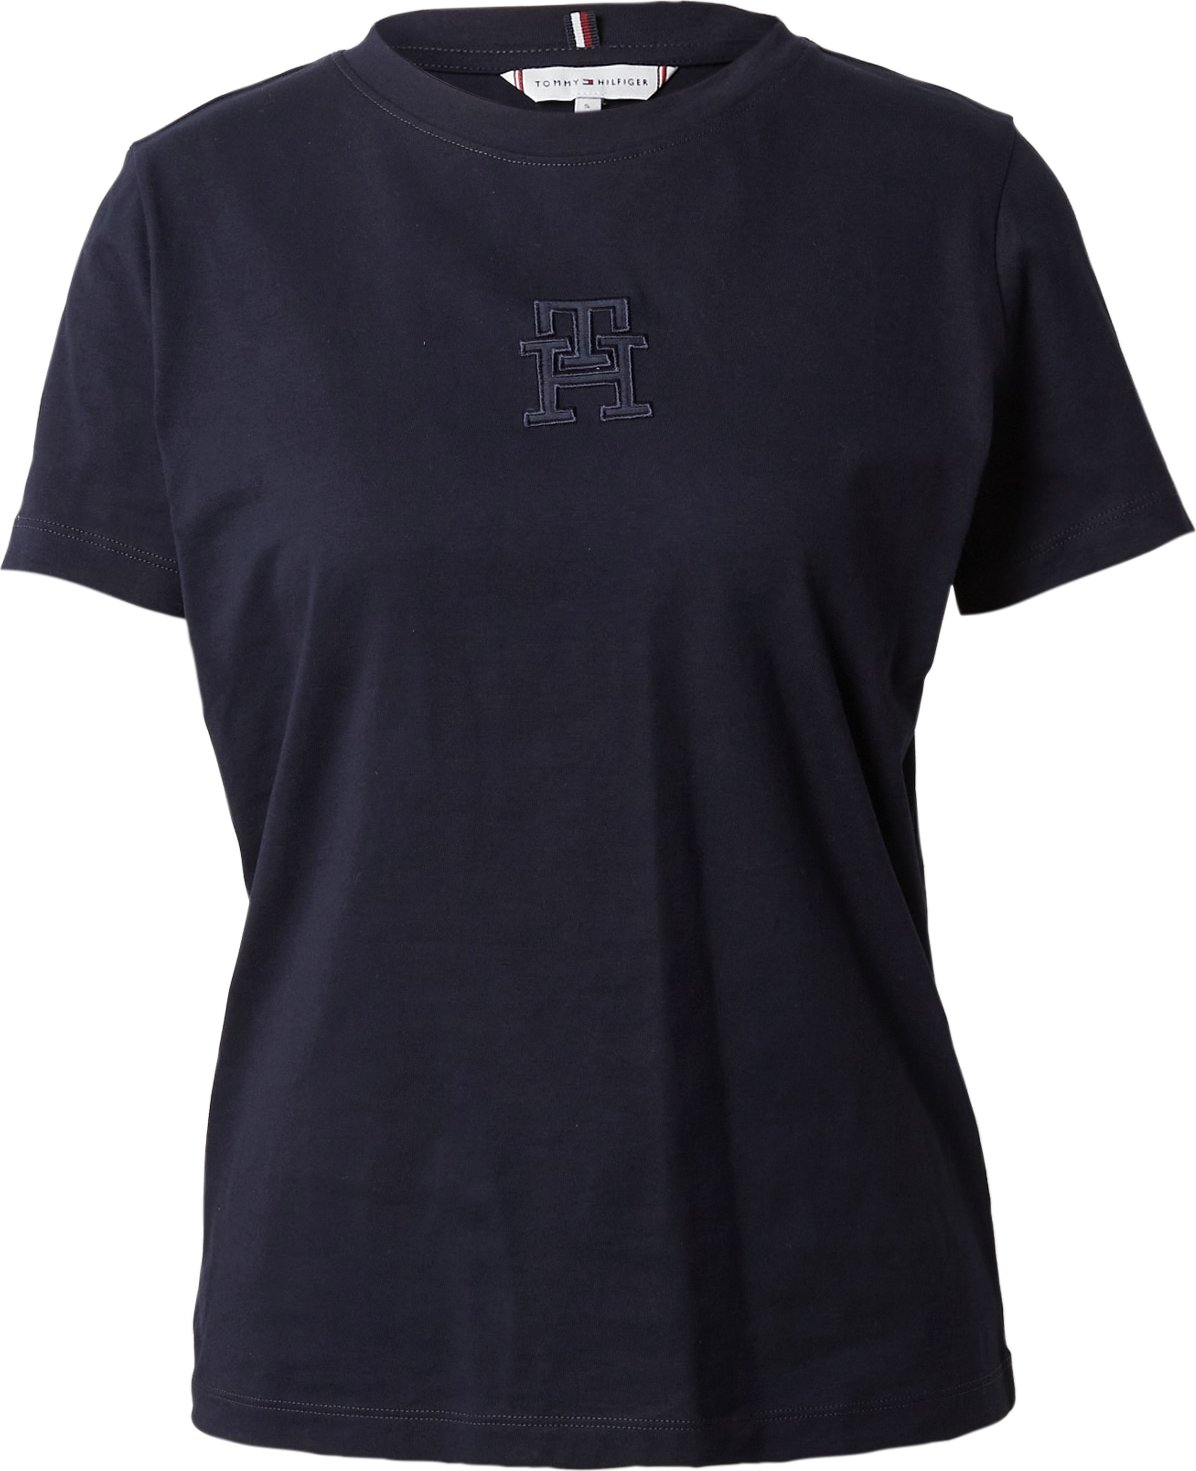 Tričko Tommy Hilfiger marine modrá